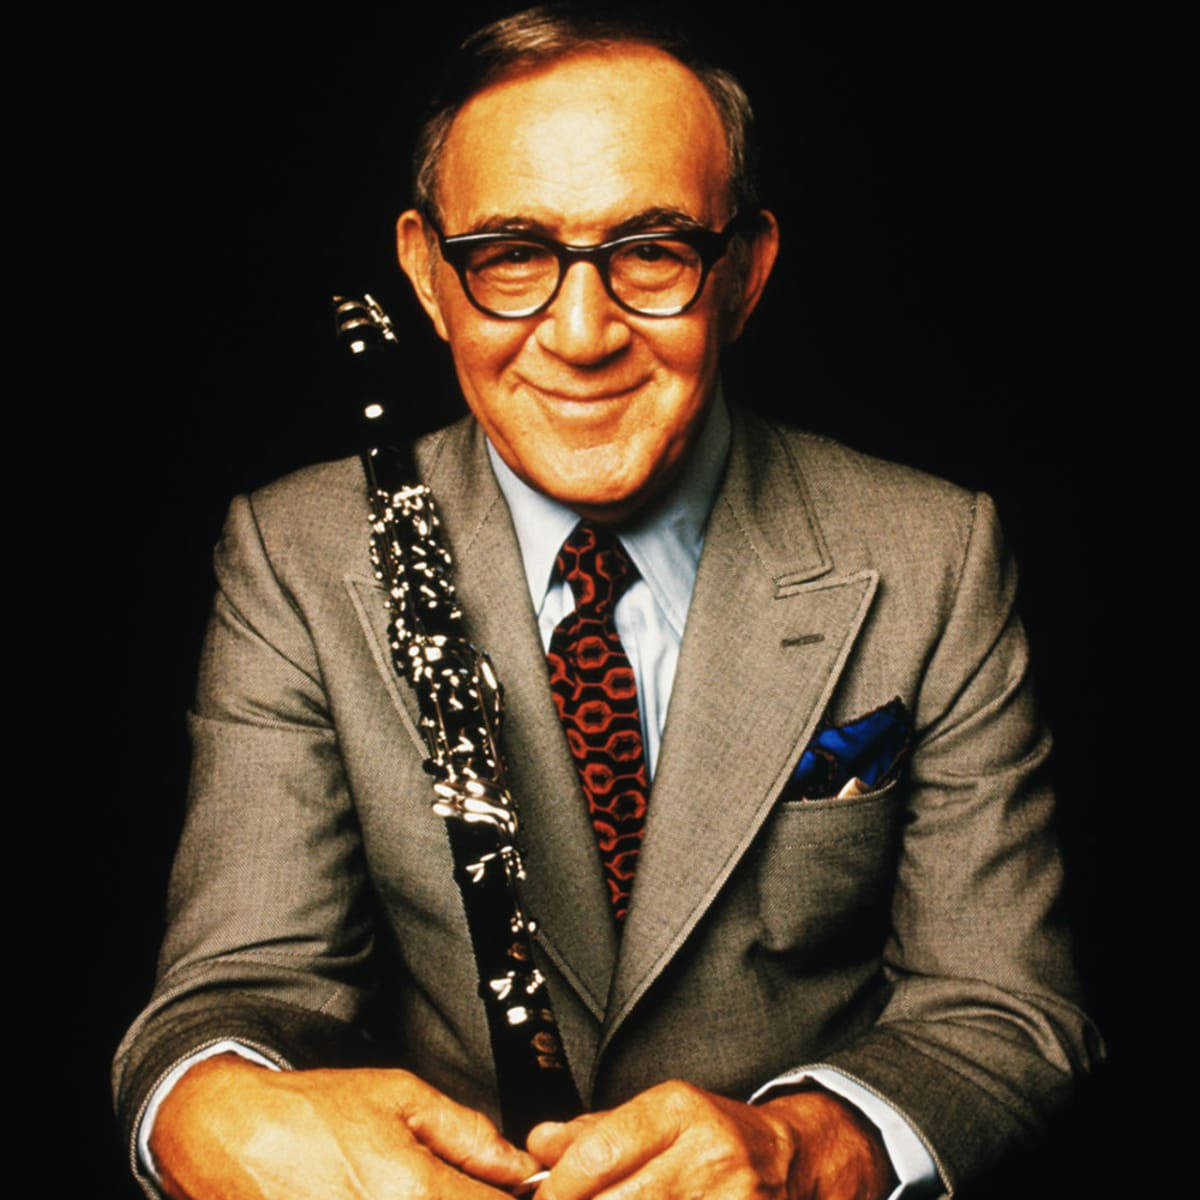 American Clarinetist Benny Goodman And His Clarinet 1977 Portrait Wallpaper